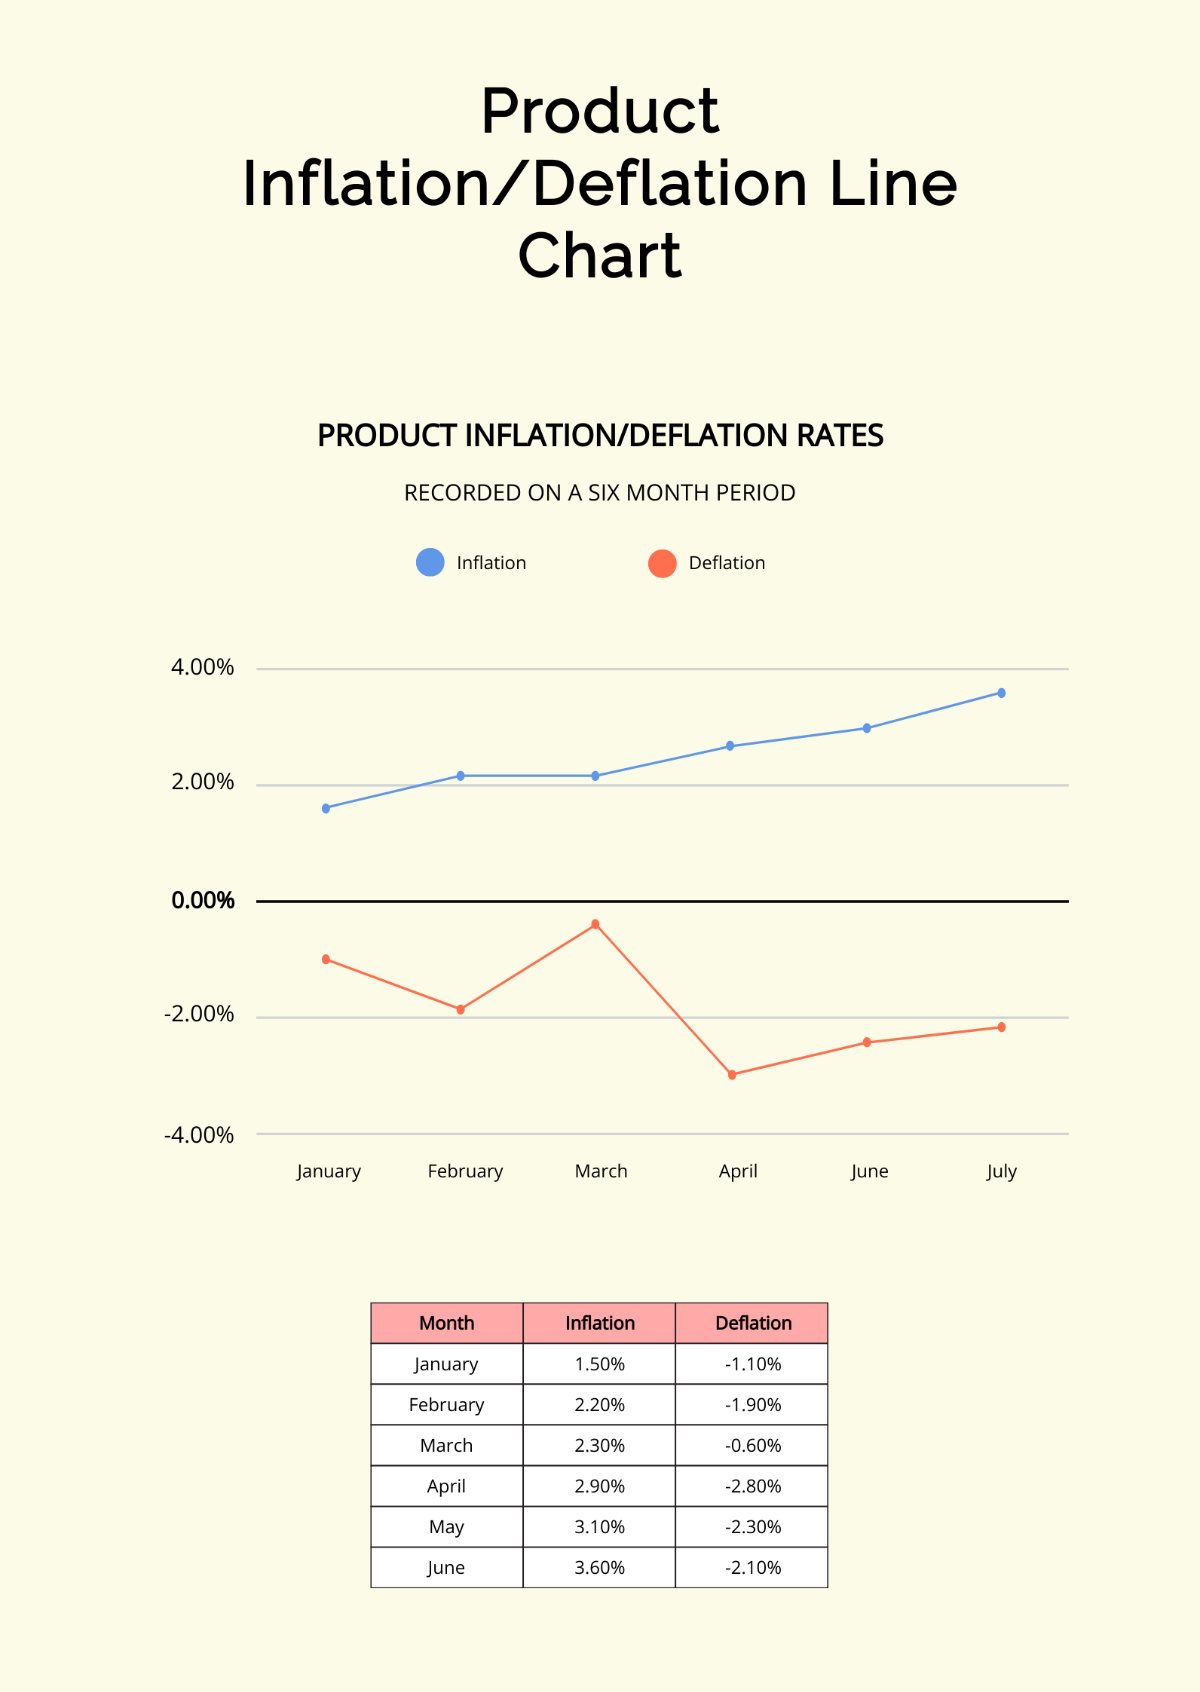 Product Inflation/Deflation Line Chart